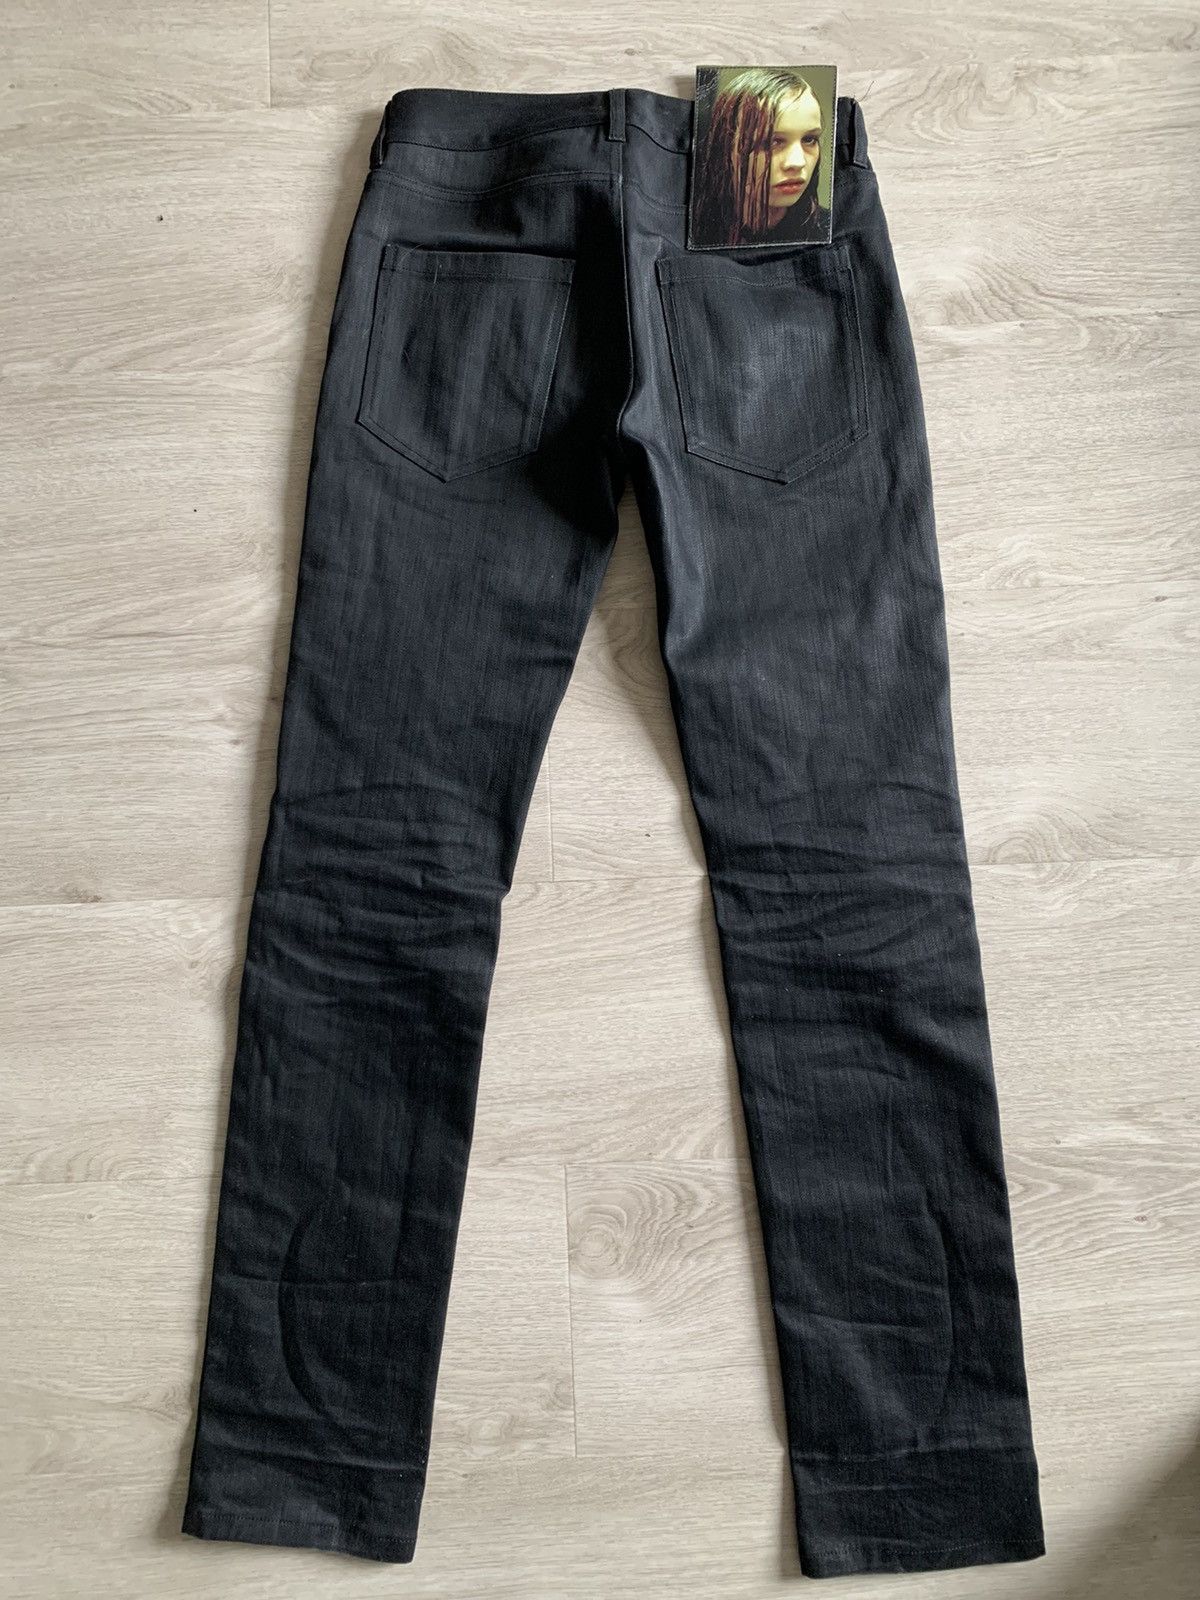 Raf Simons Raf Simons FW18 Christiane F waxed patch jeans | Grailed